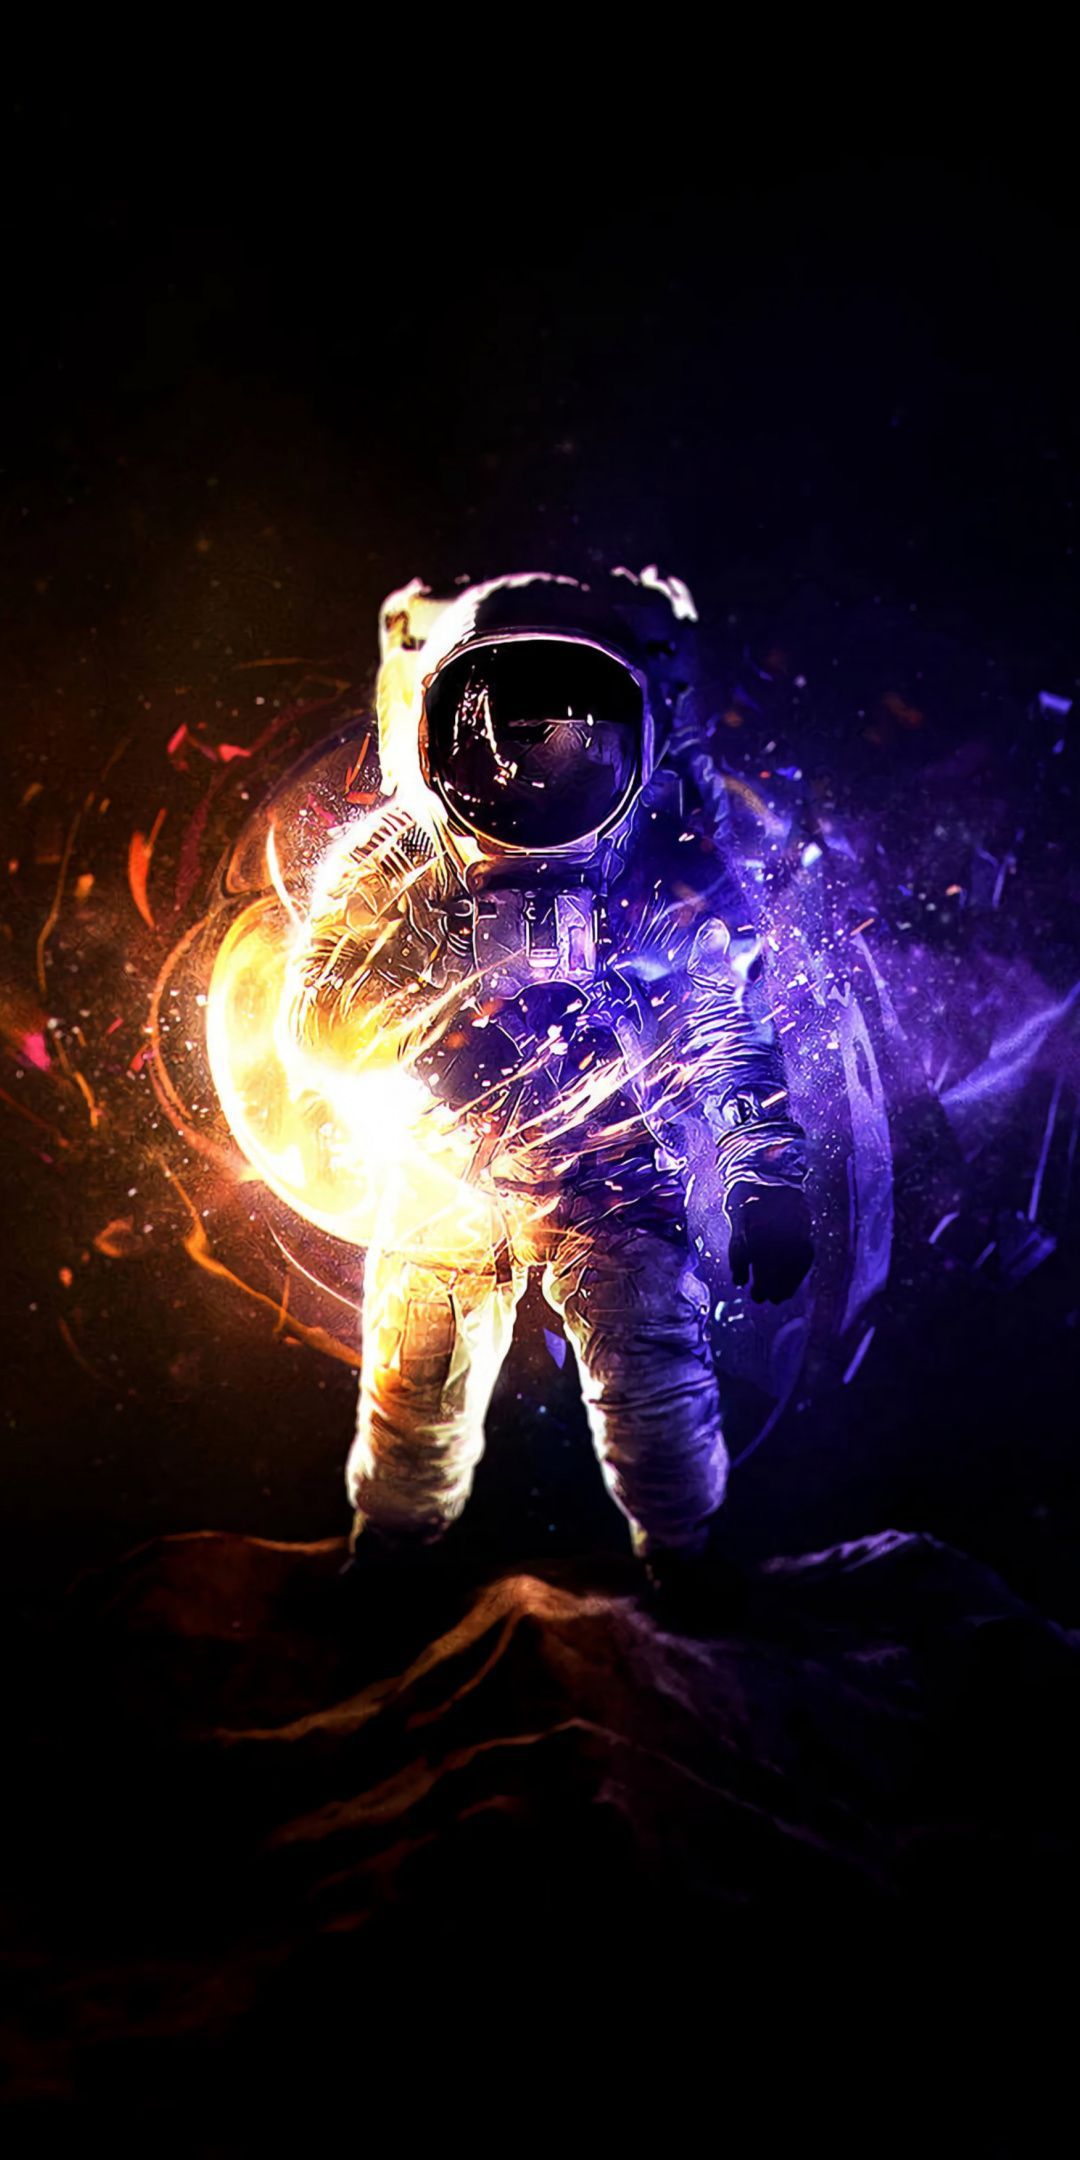 Astronaut, cosmonaut, space suit, art Wallpaper. Fondos de pantalla nike, Fondo de pantalla de humo, Imagenes de astronautas